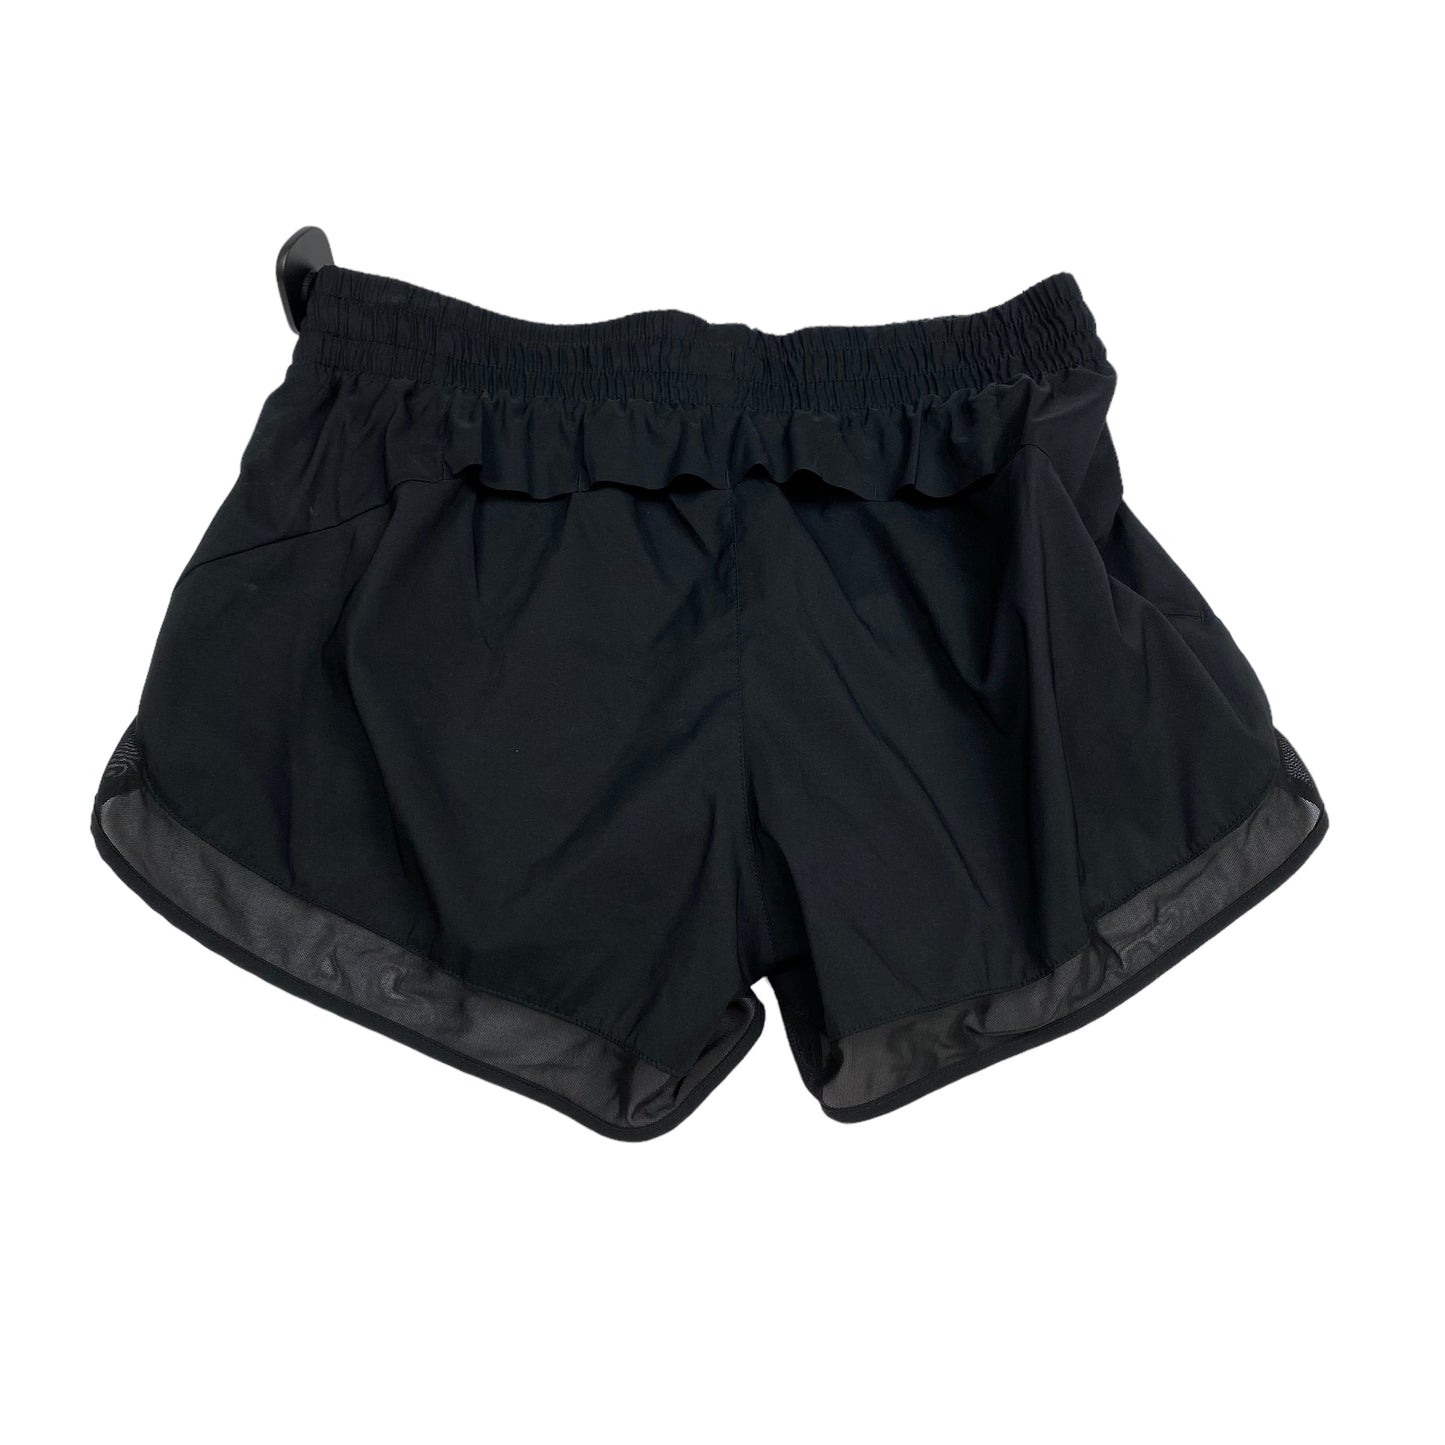 Athletic Shorts By Athleta  Size: M